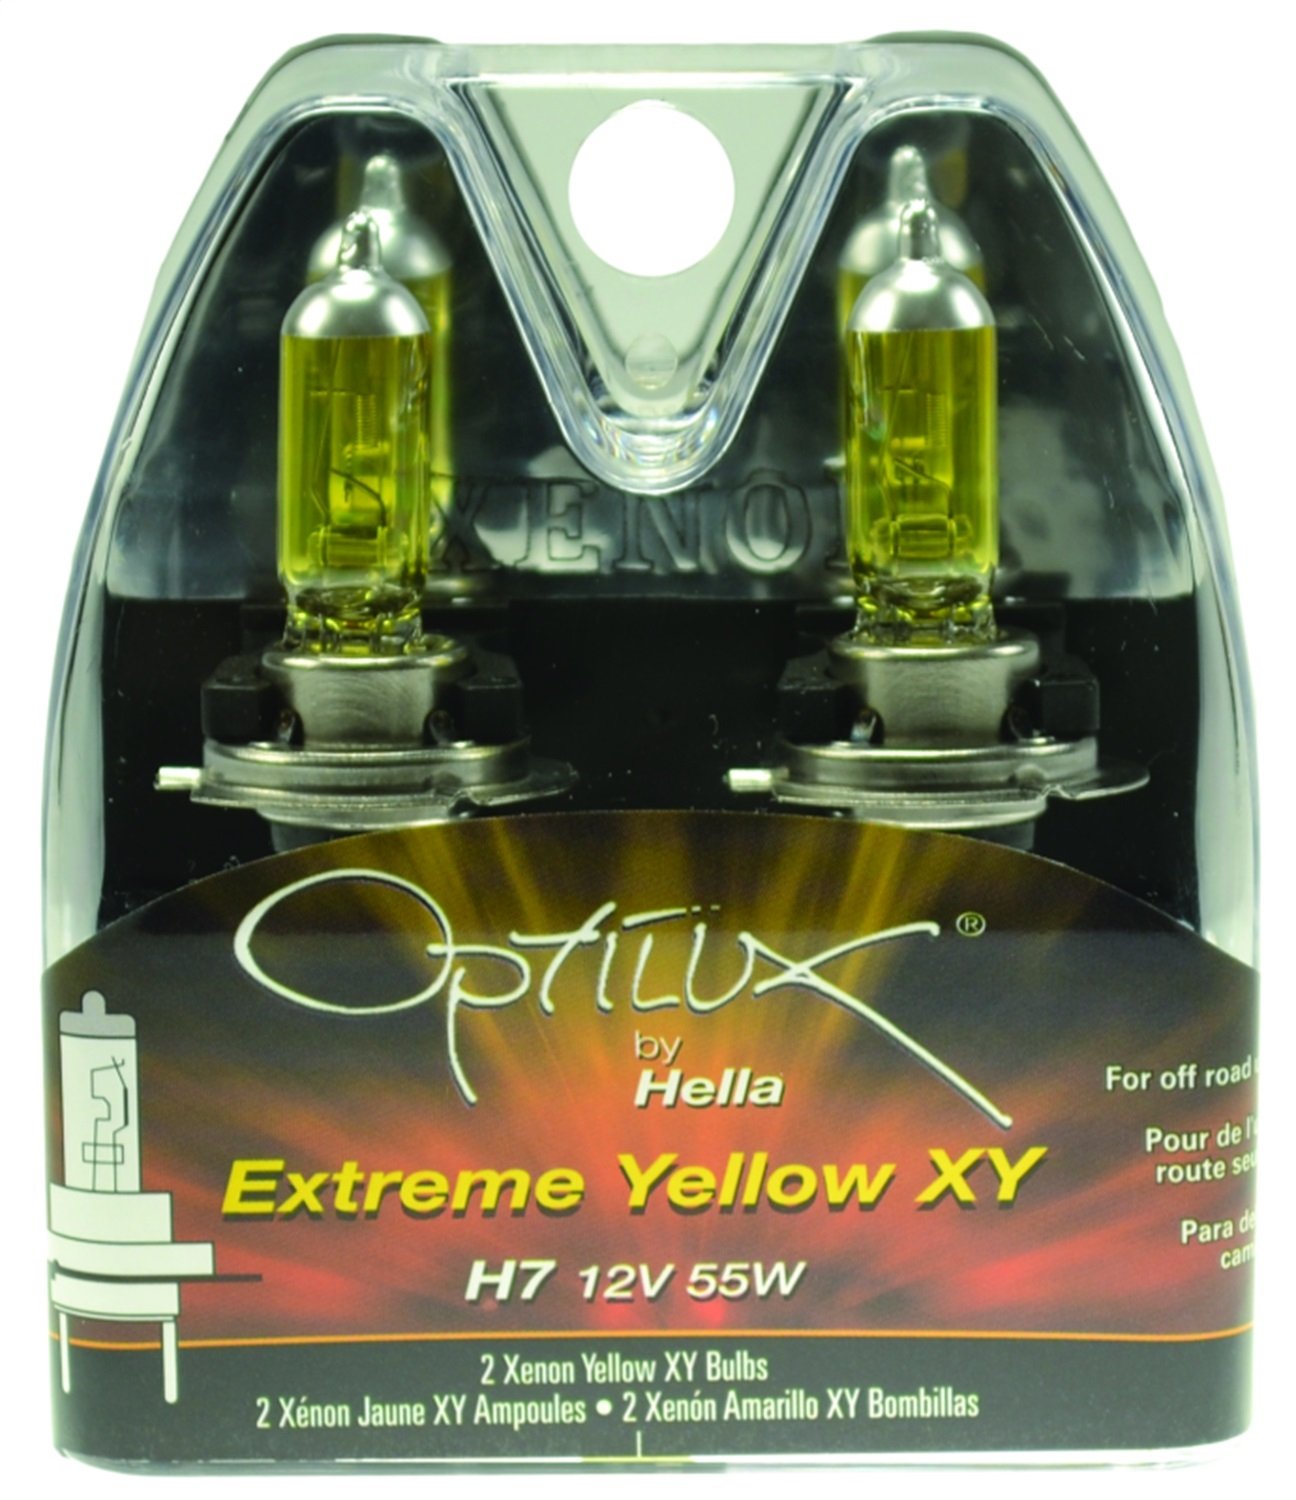 Optilux Extreme Yellow XY Bulbs Bulb Type: H7